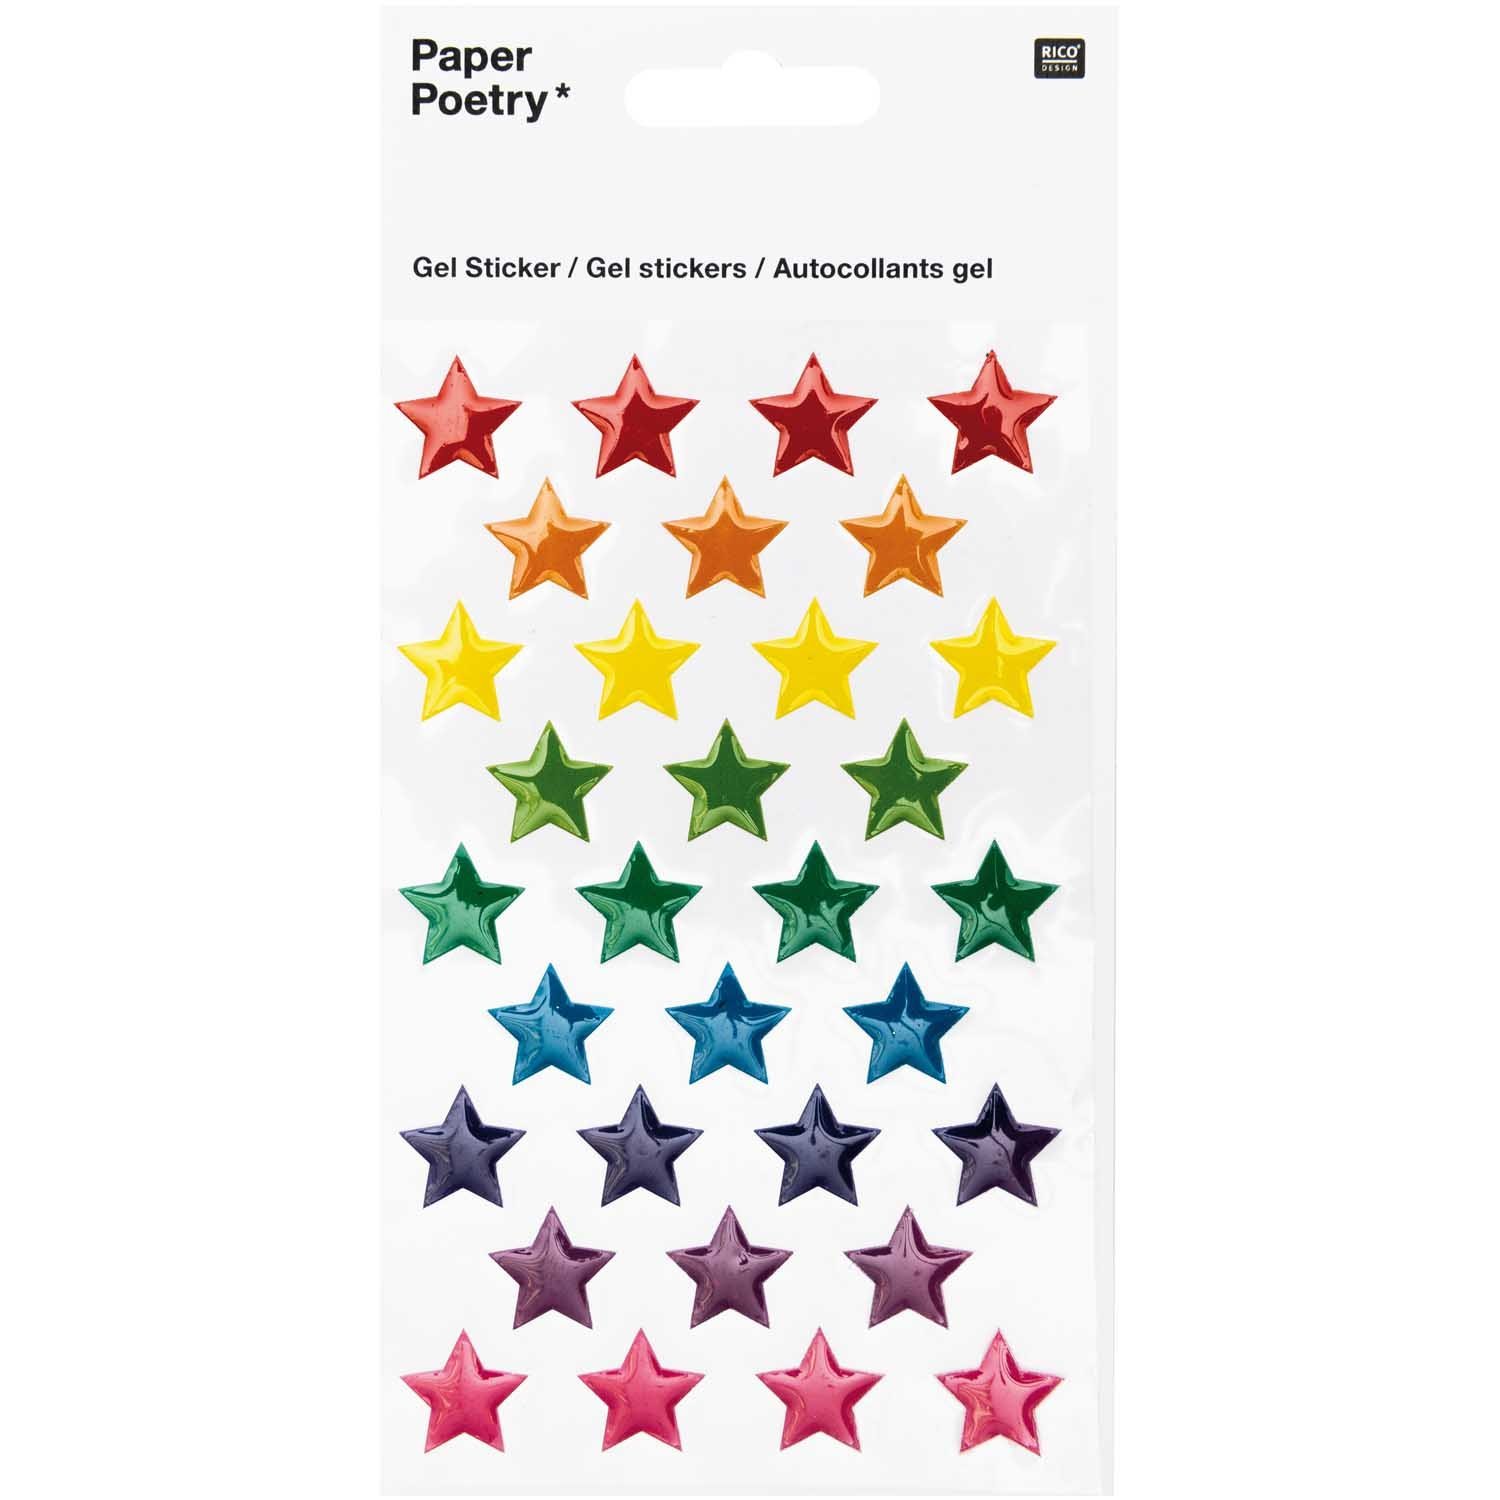 Buy Paper Poetry 3D-Sticker selbstklebend online at Modulor